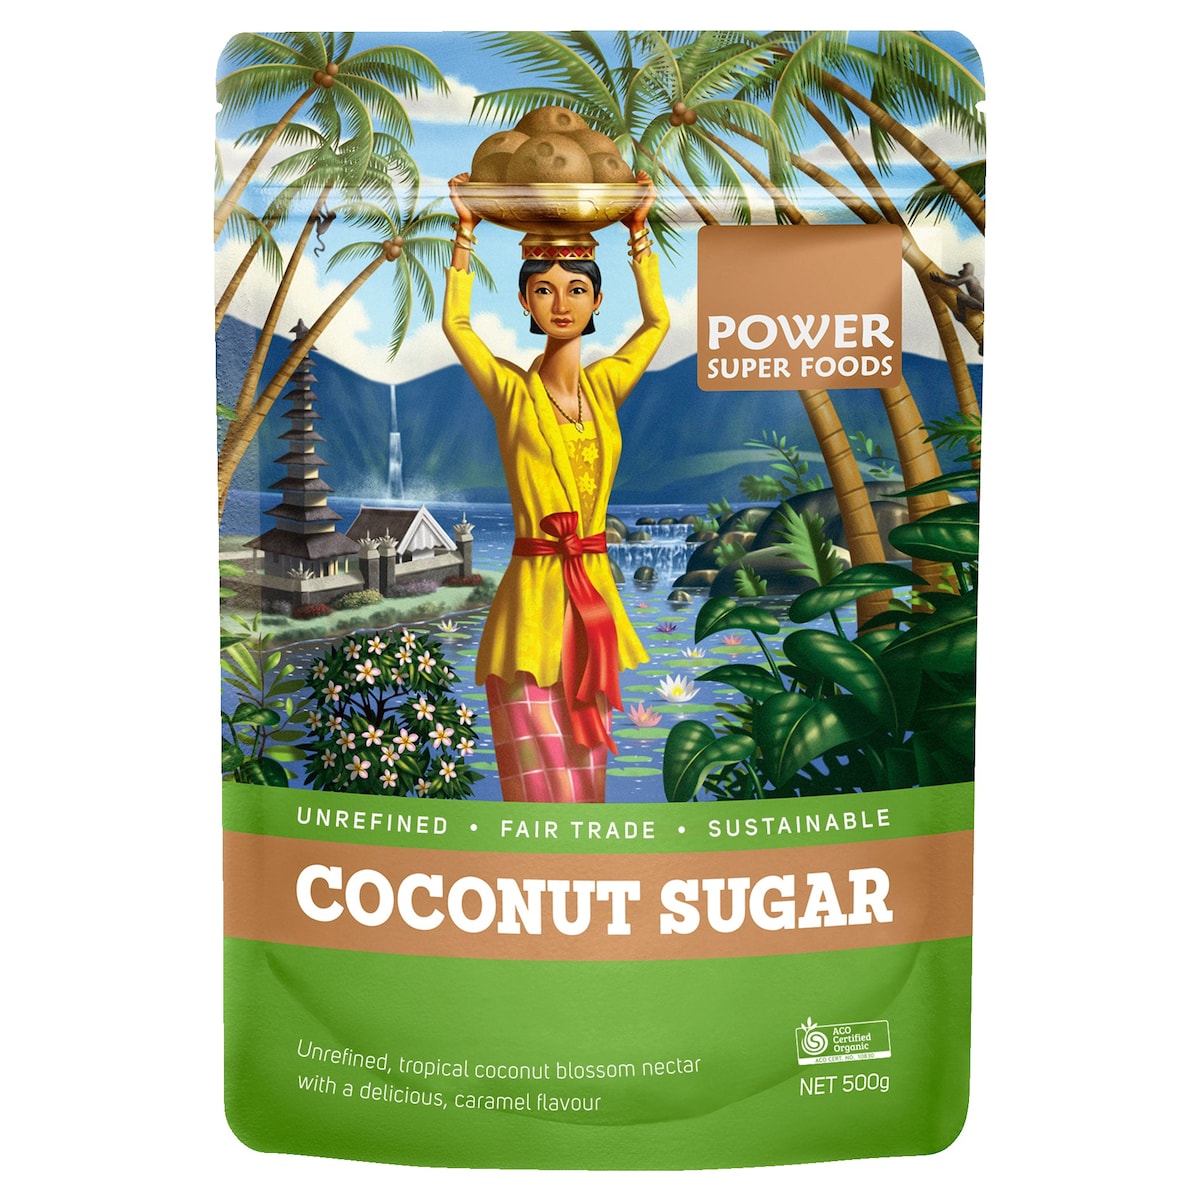 Power Super Foods Coconut Sugar 200g